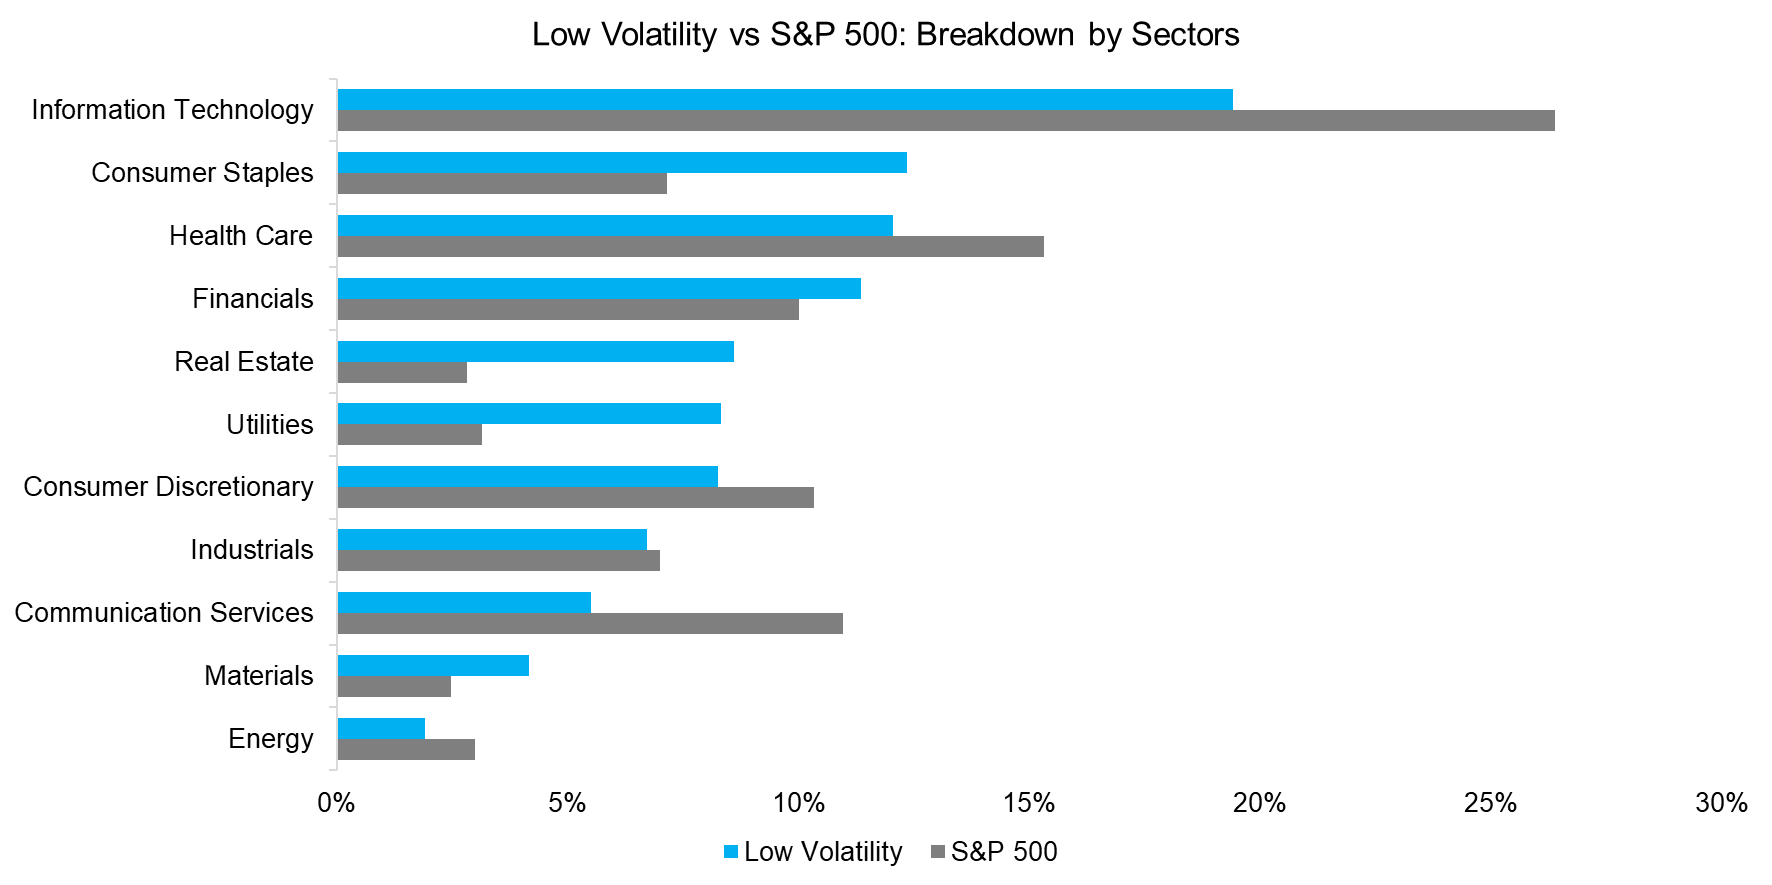 Low Volatility vs S&P 500 Breakdown by Sectors